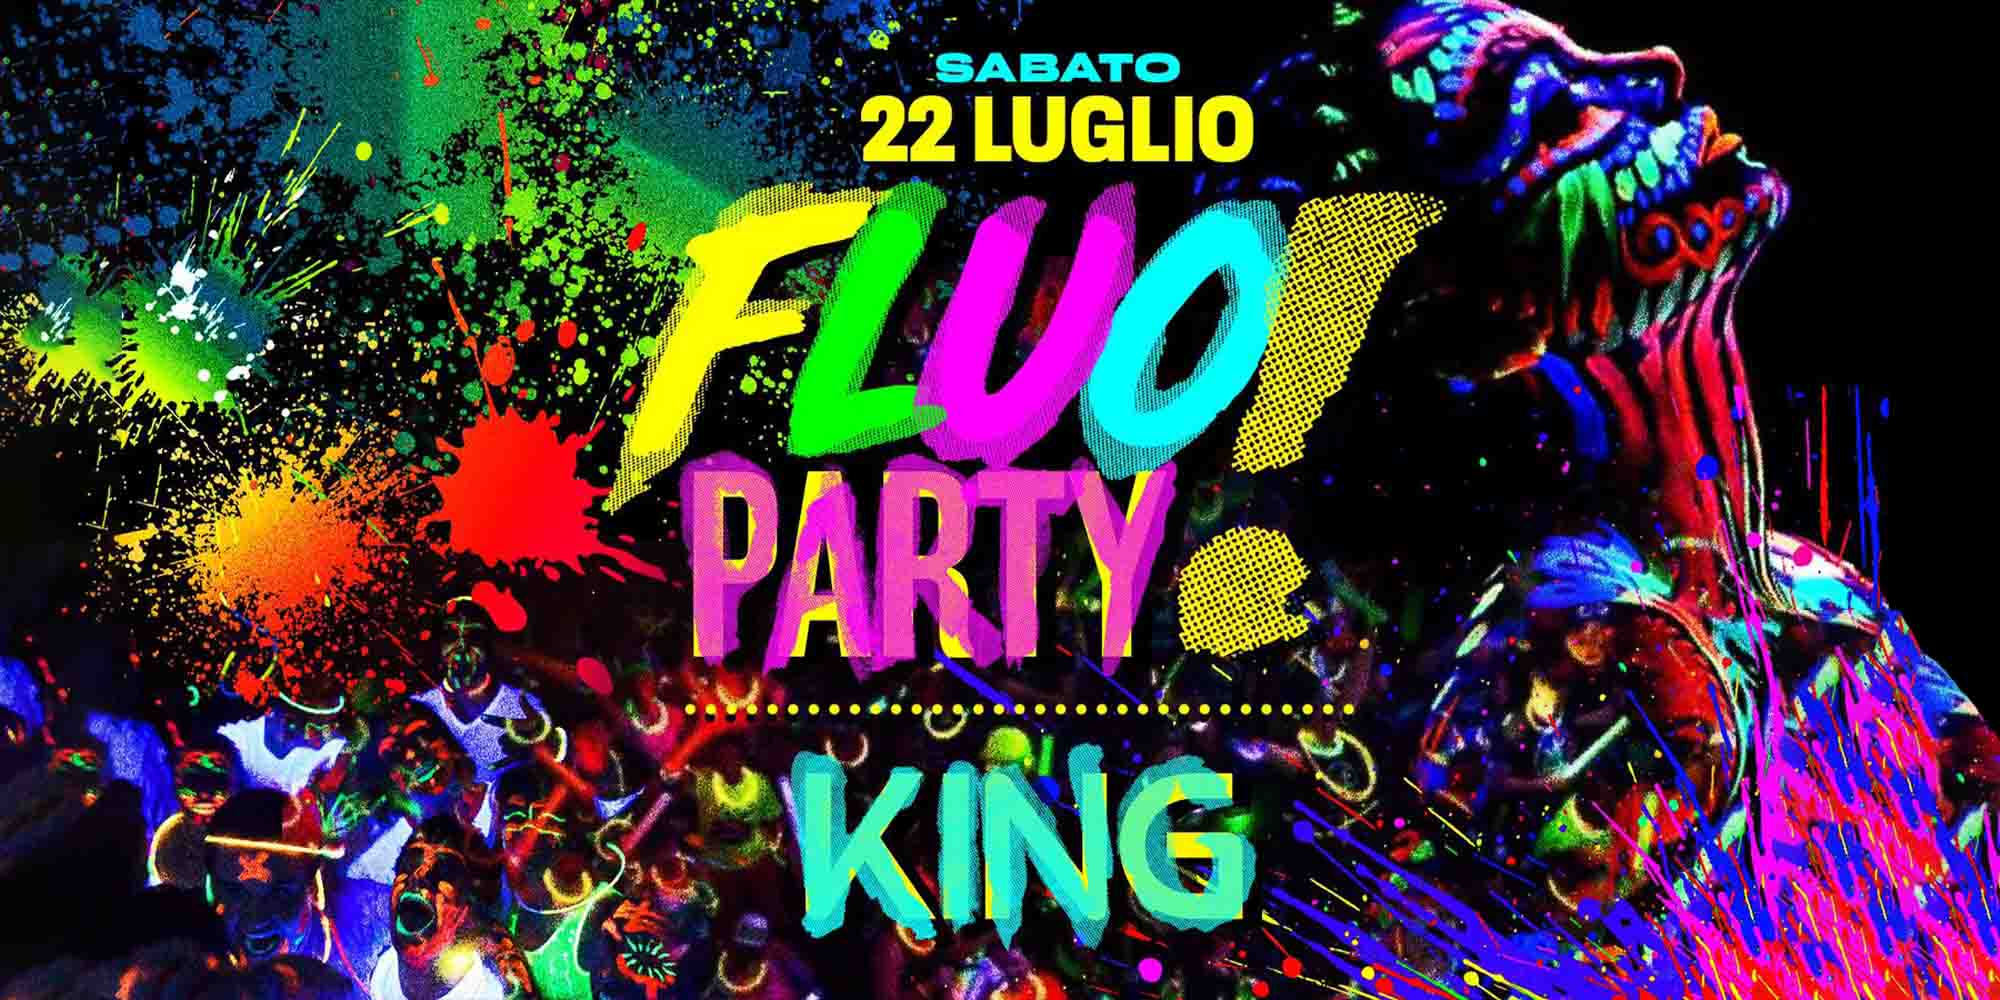 Fluo Party @ KING 22 Luglio 2023 - Ticket • Event Destination